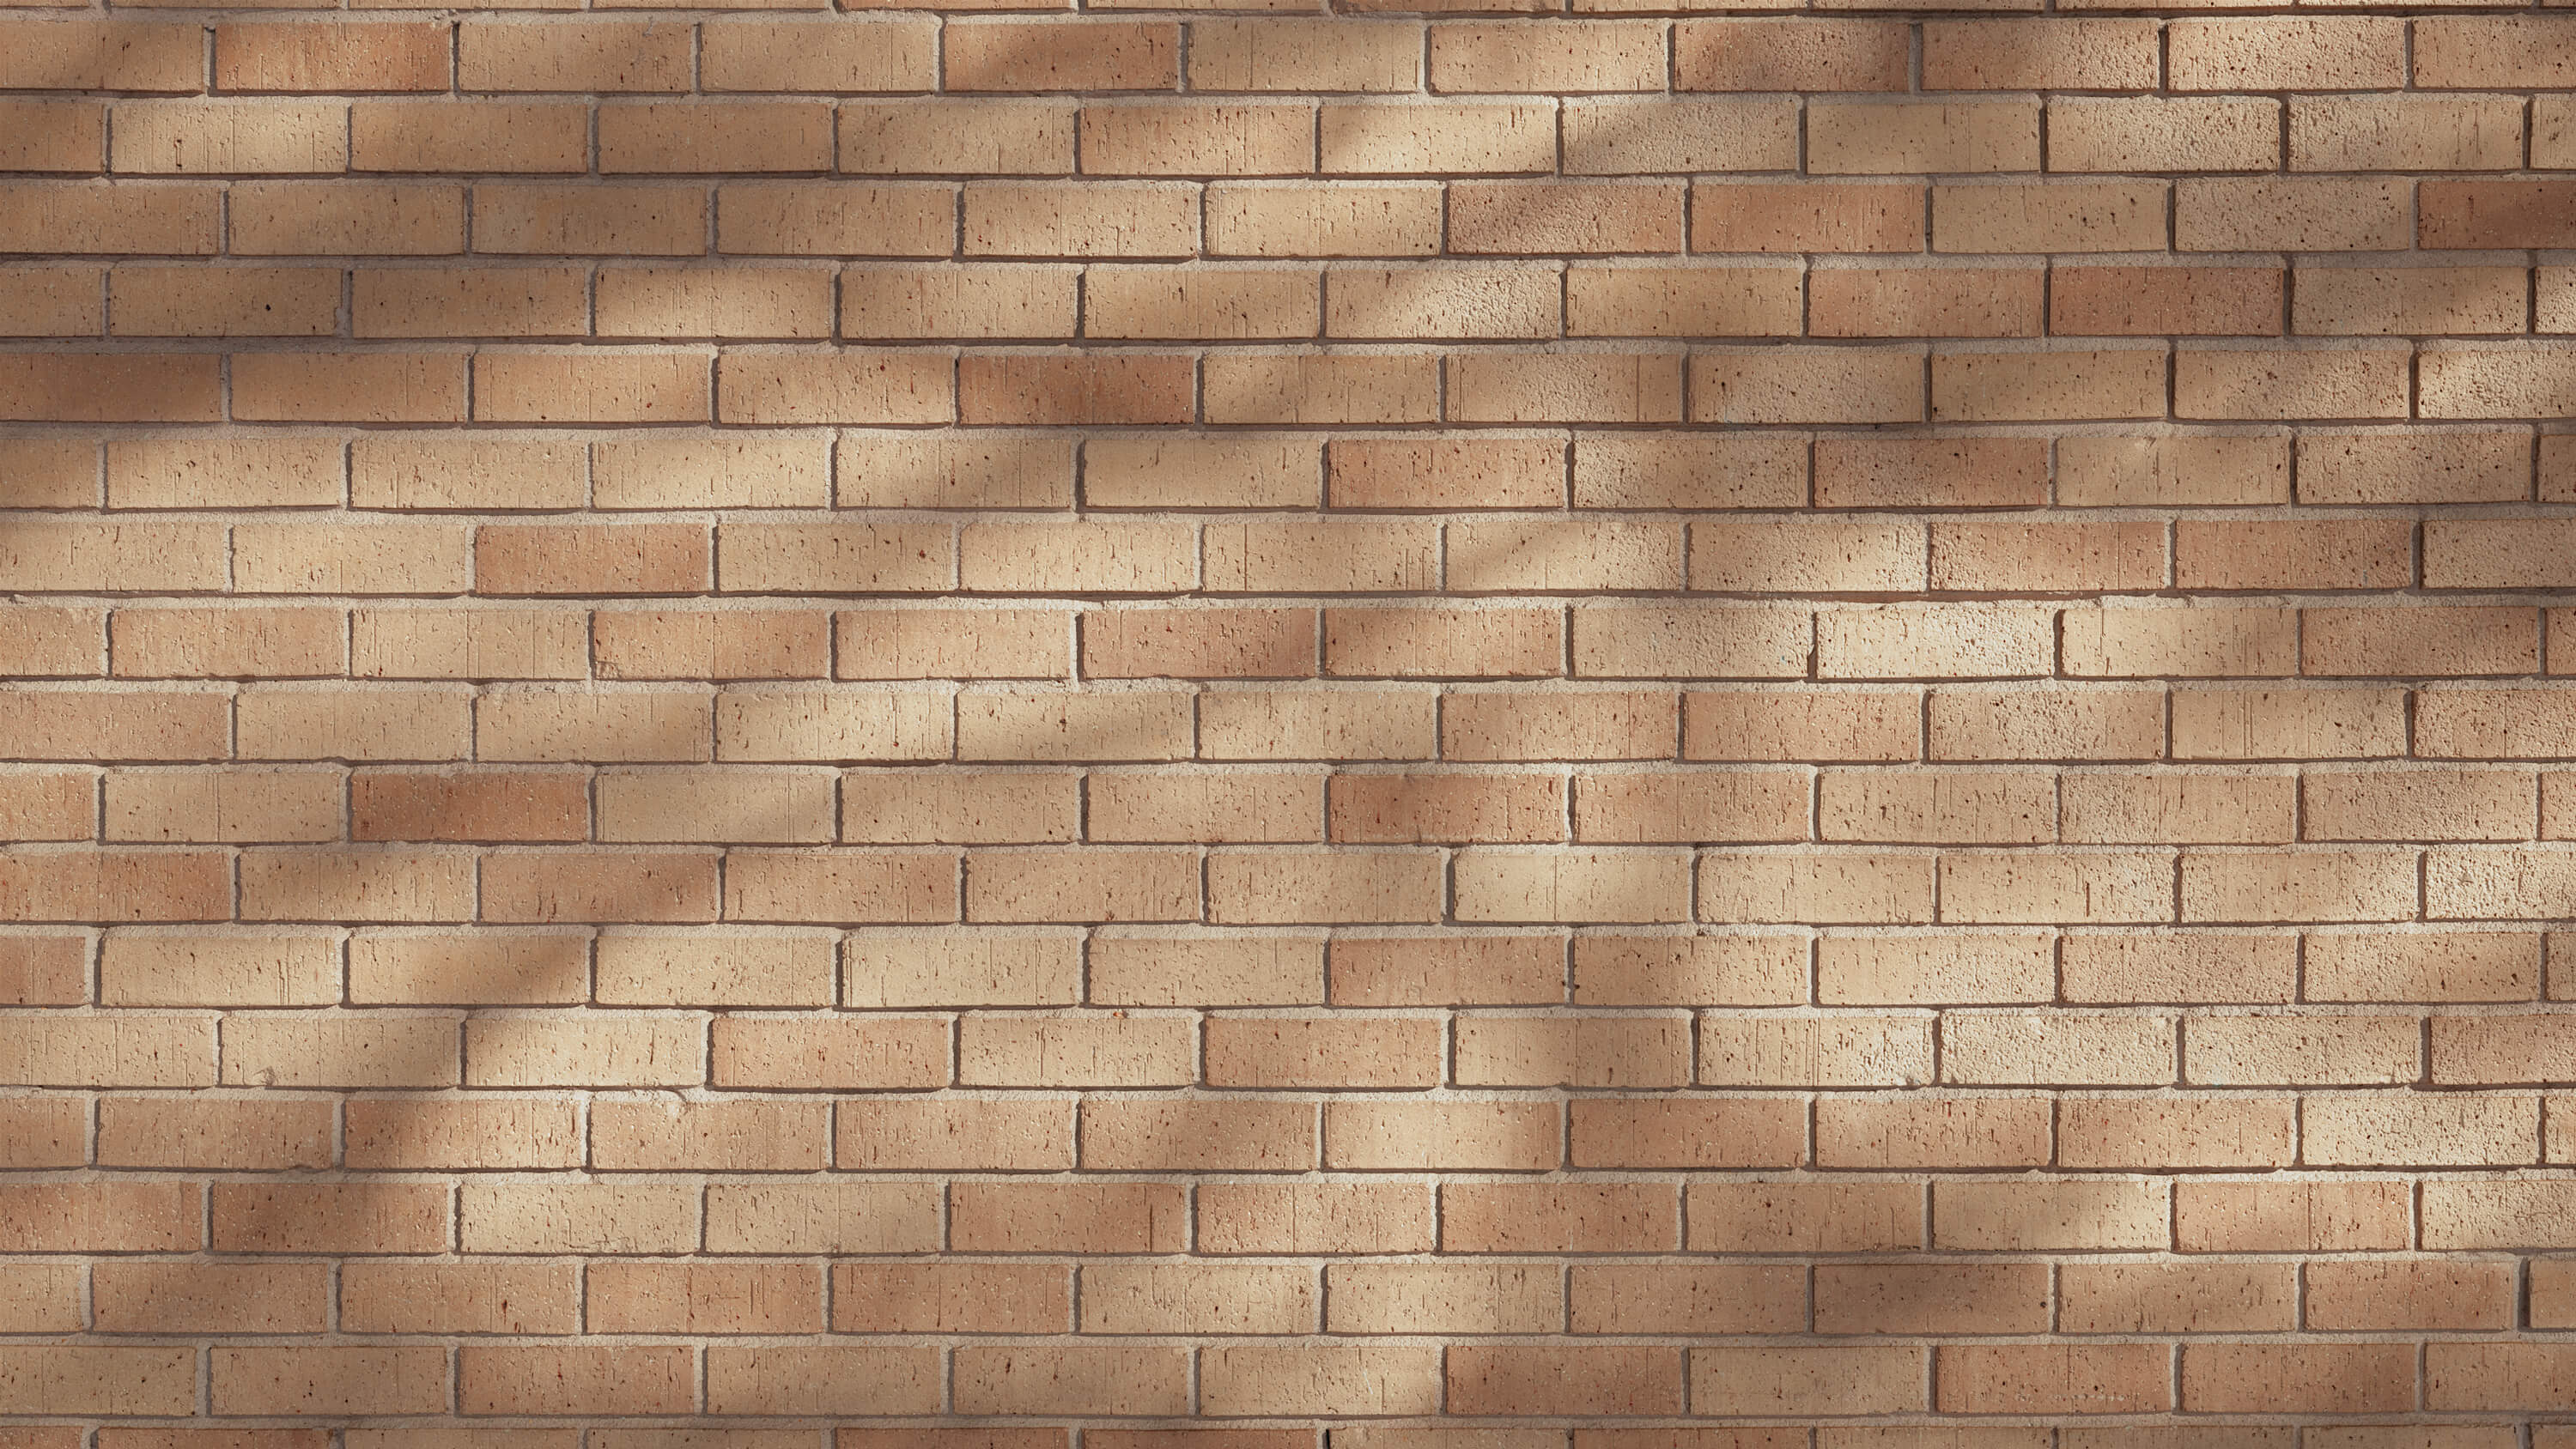 Seamless Brick wall texture